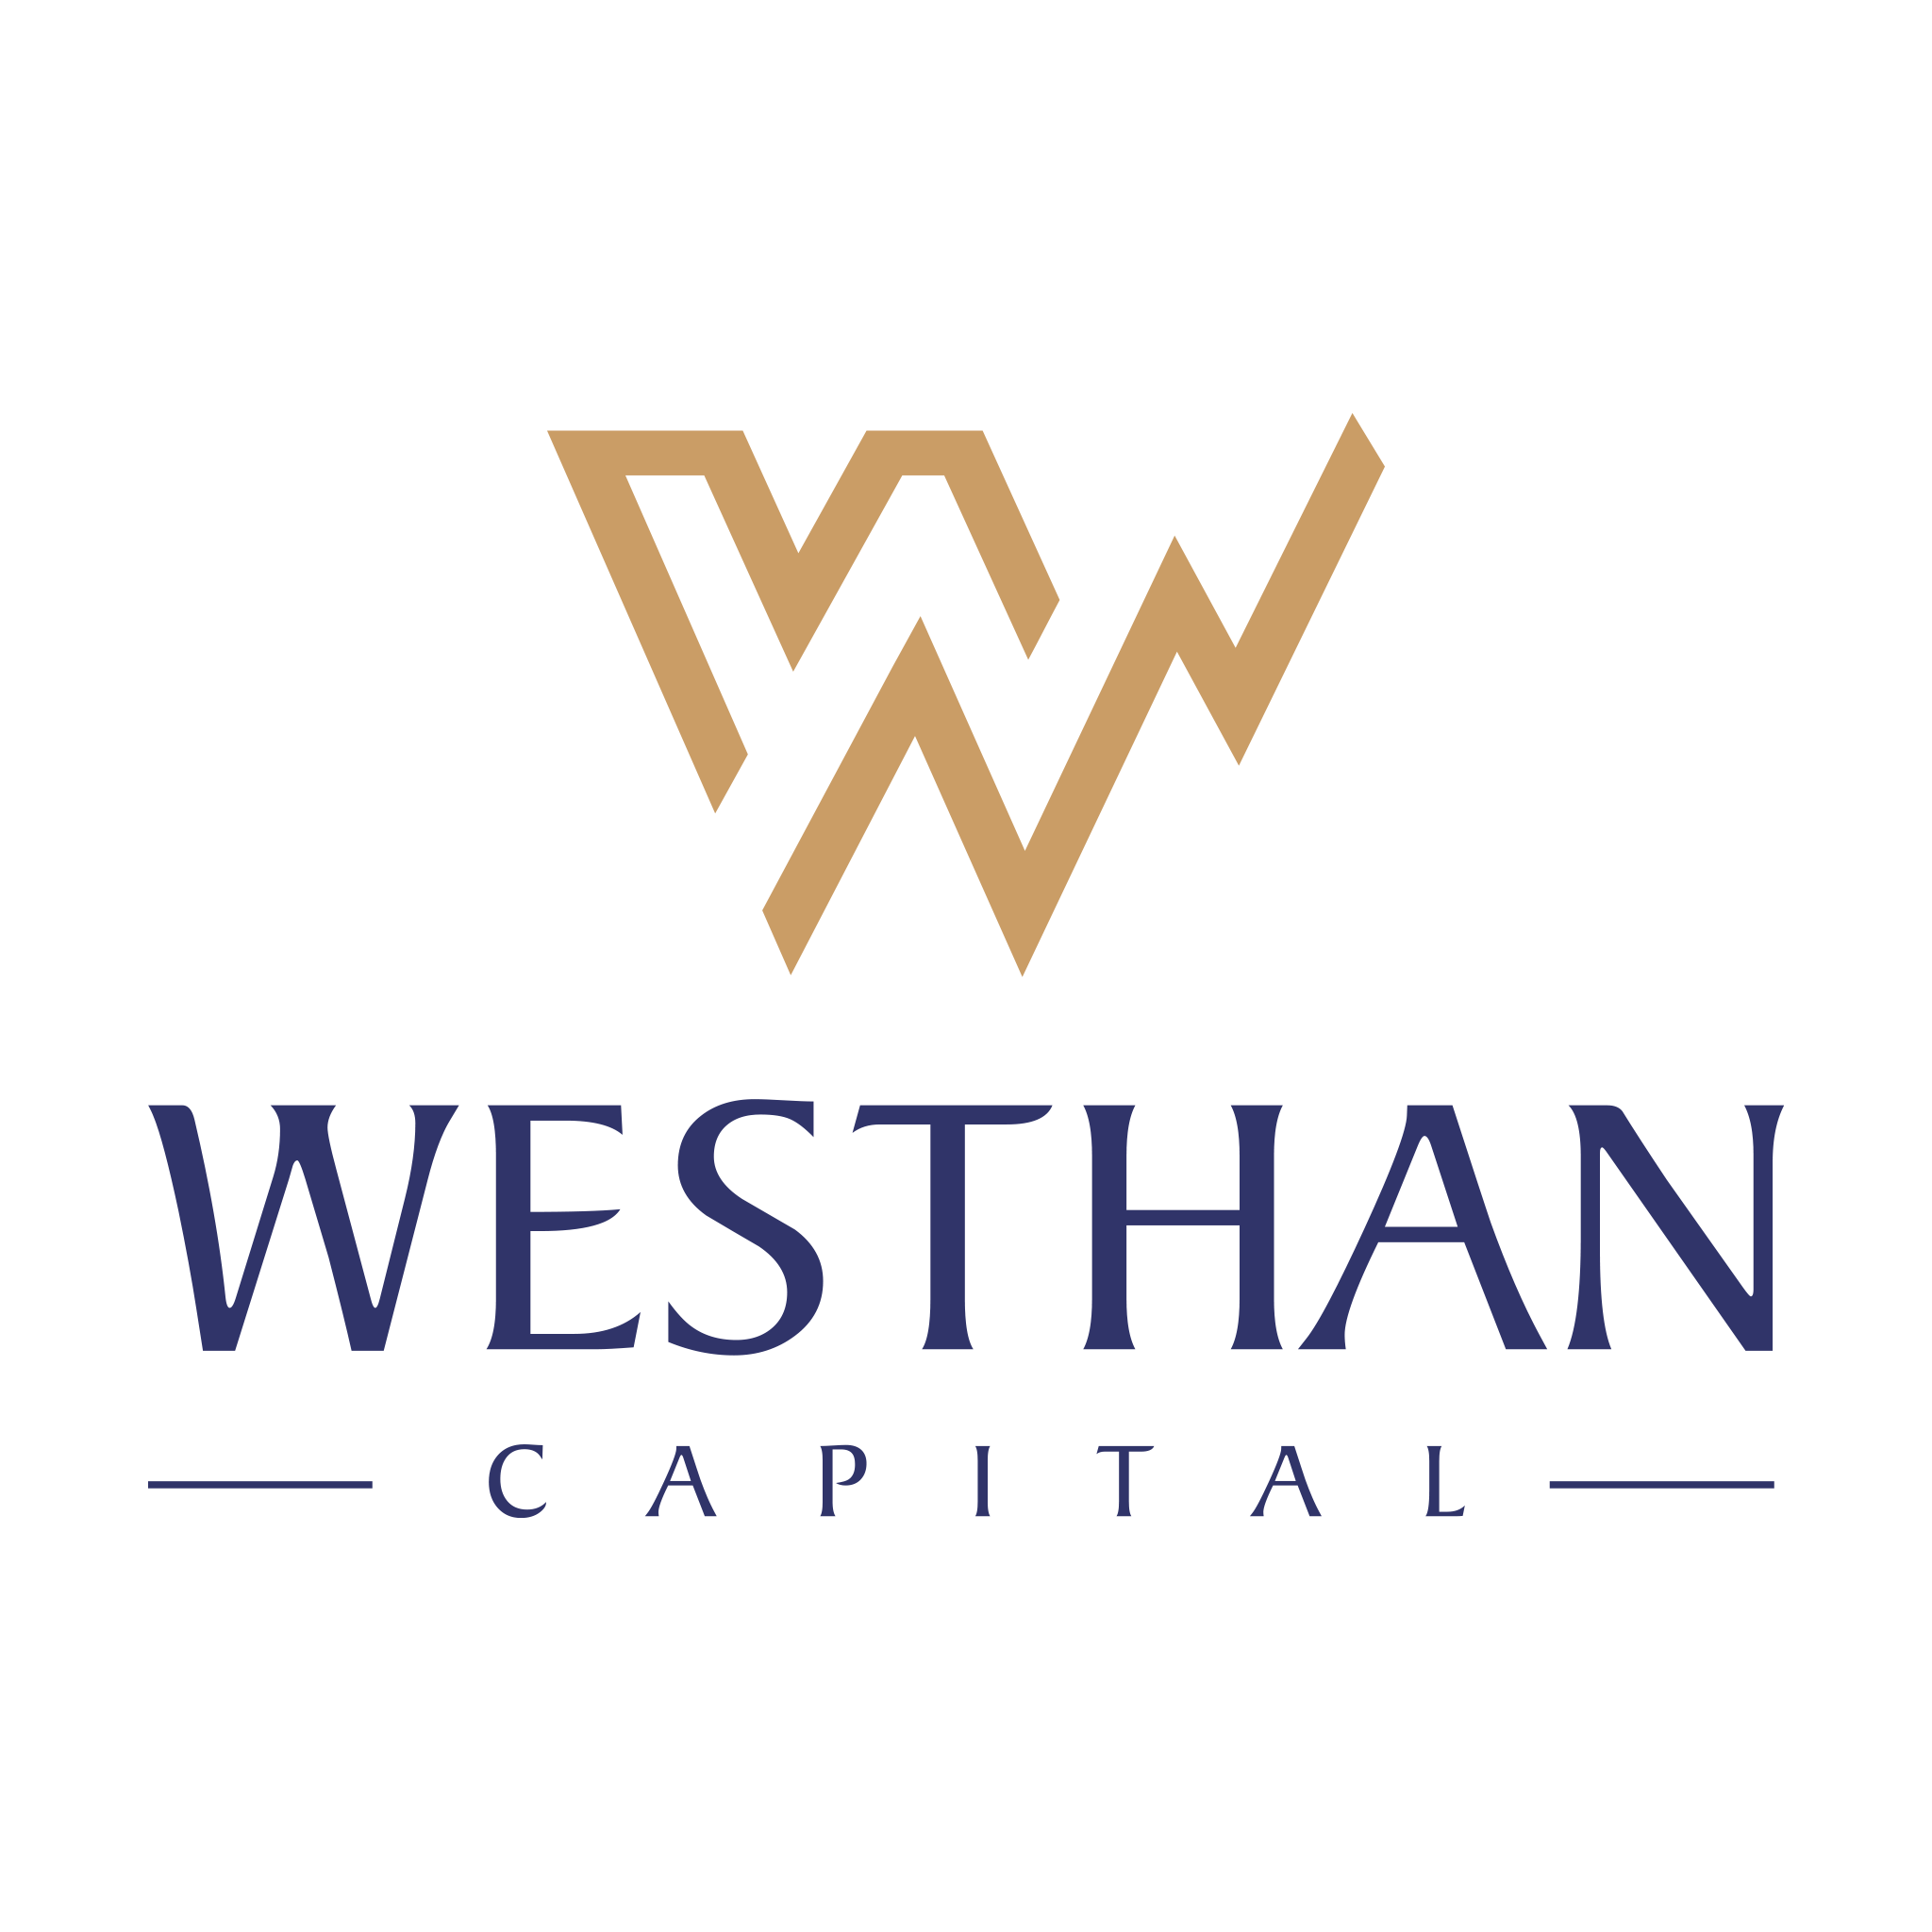 westhan capital logo